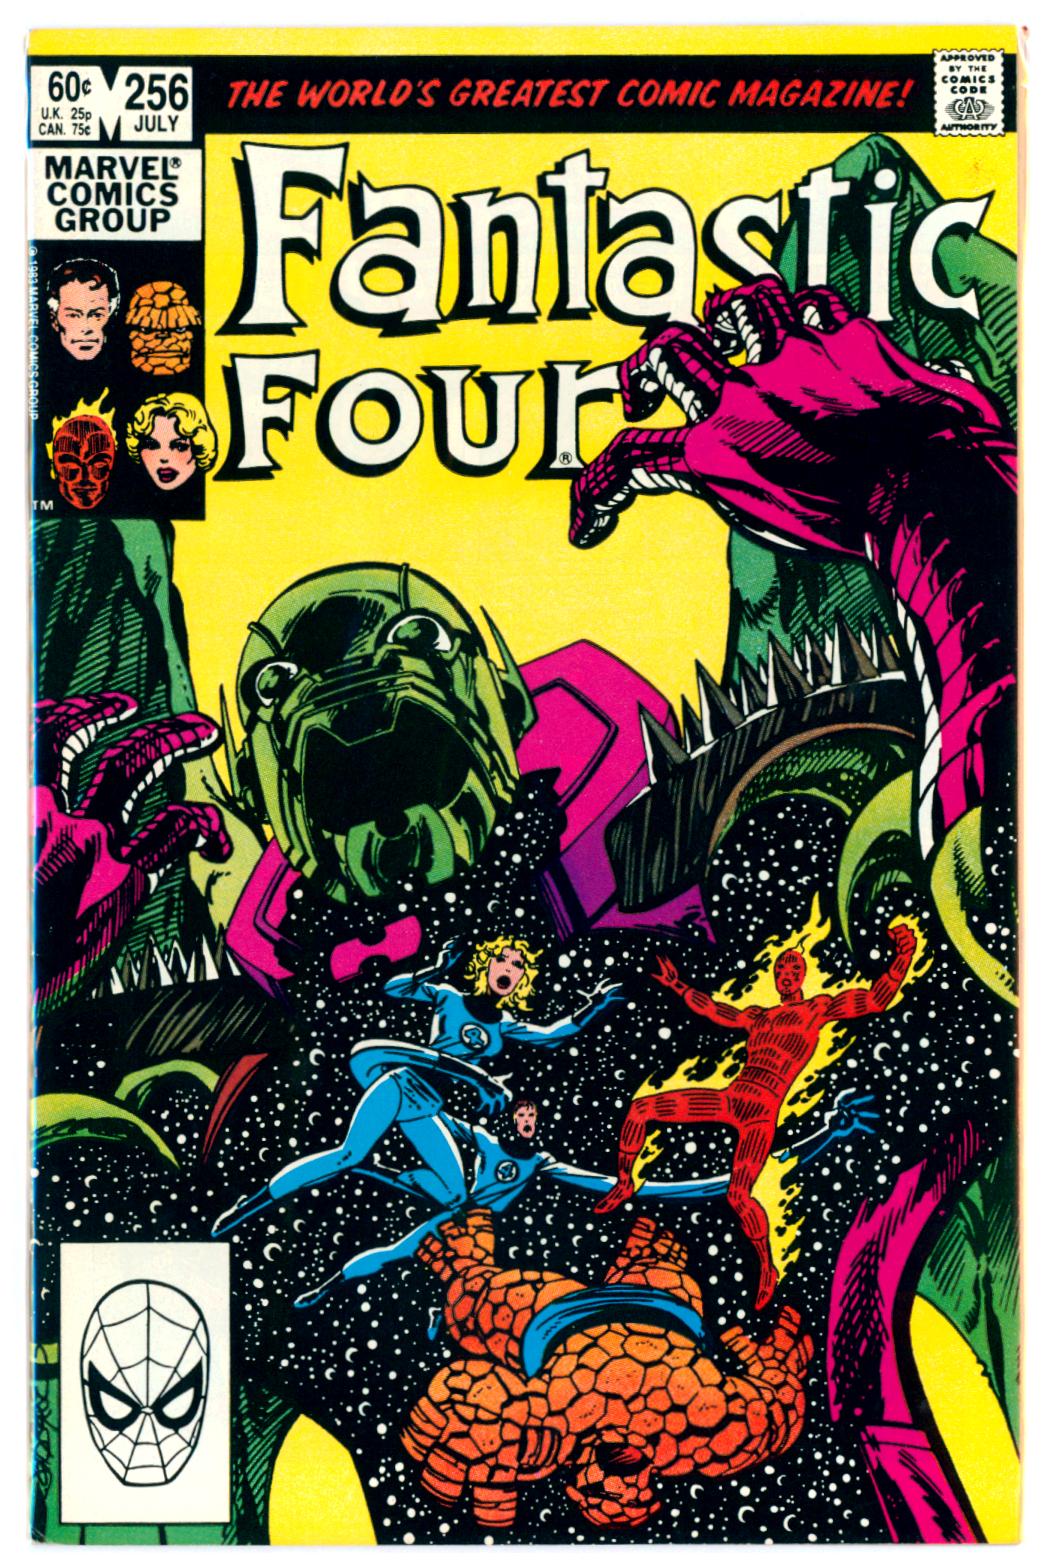 Fantastic Four #256